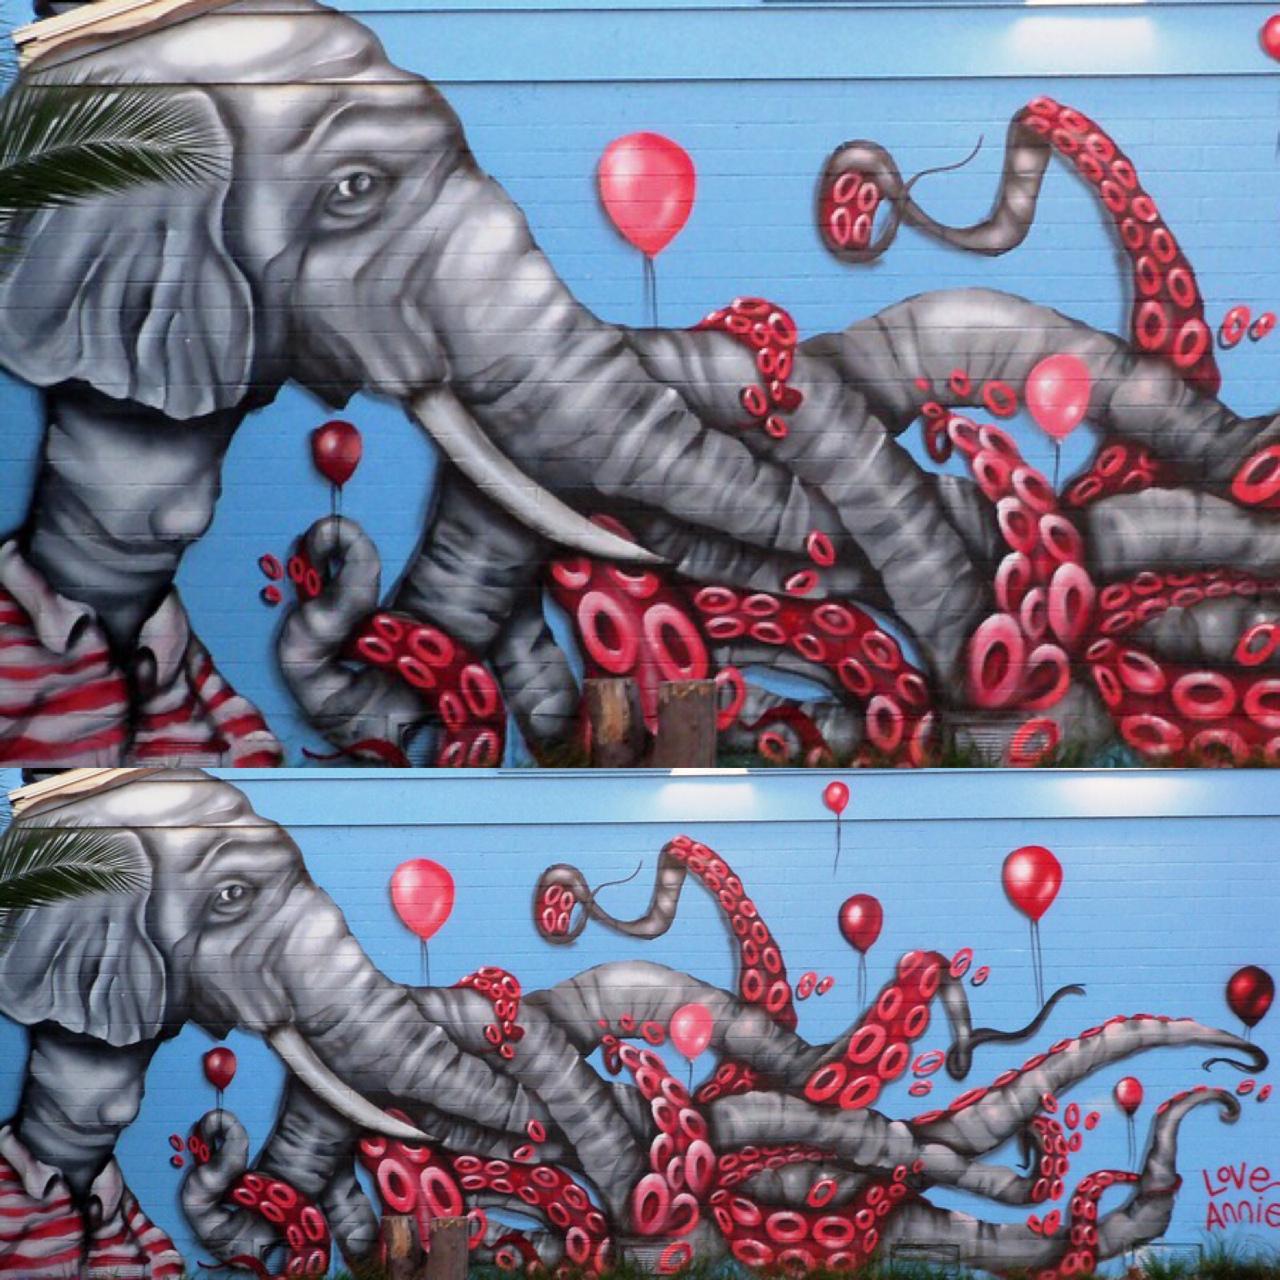 By anniepreece in Cali
#streetart #urbanart #graffiti #mural http://t.co/Xq2bo8R2U7